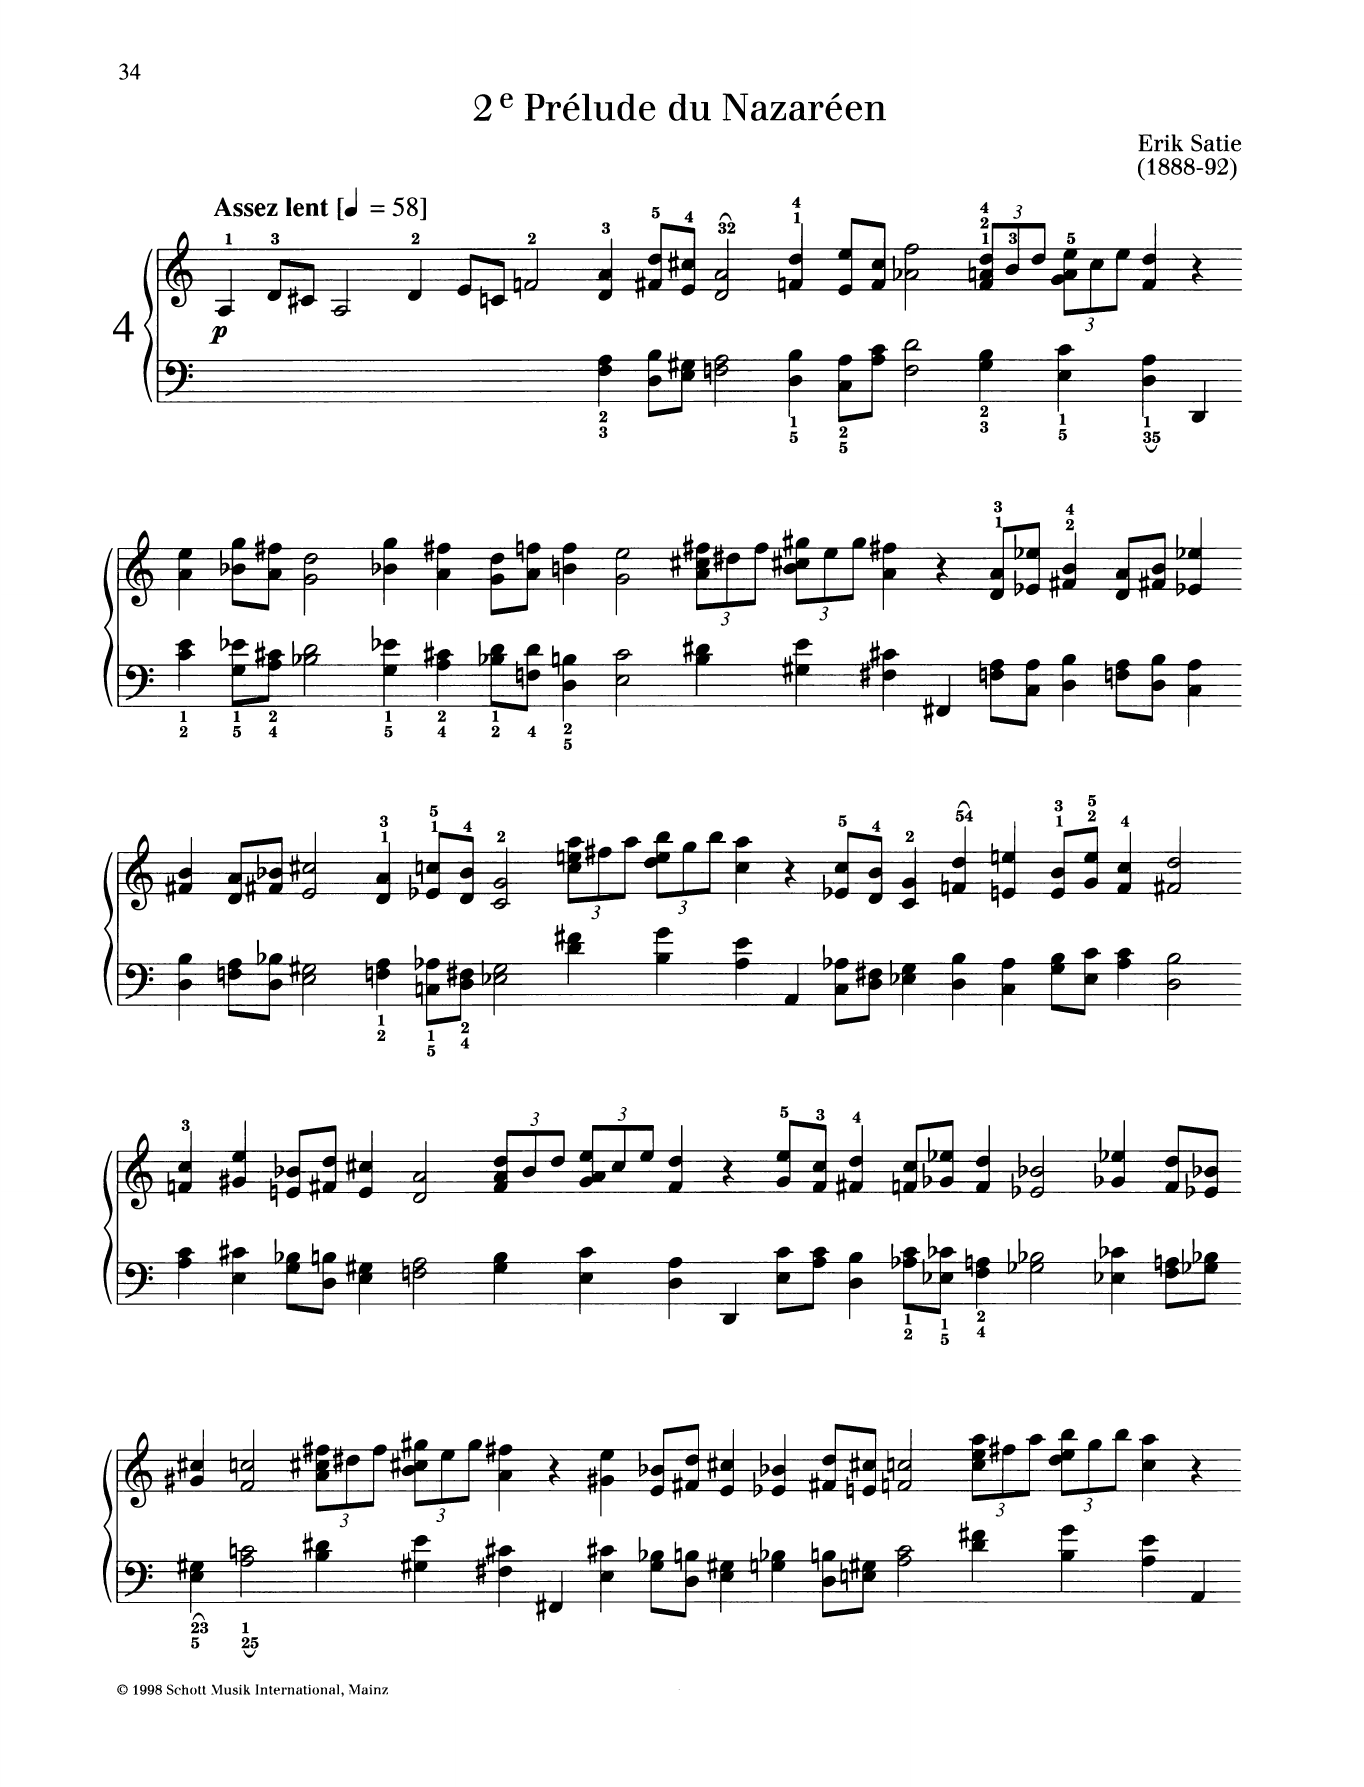 Erik Satie 2e Prelude du Nazareen Sheet Music Notes & Chords for Piano Solo - Download or Print PDF